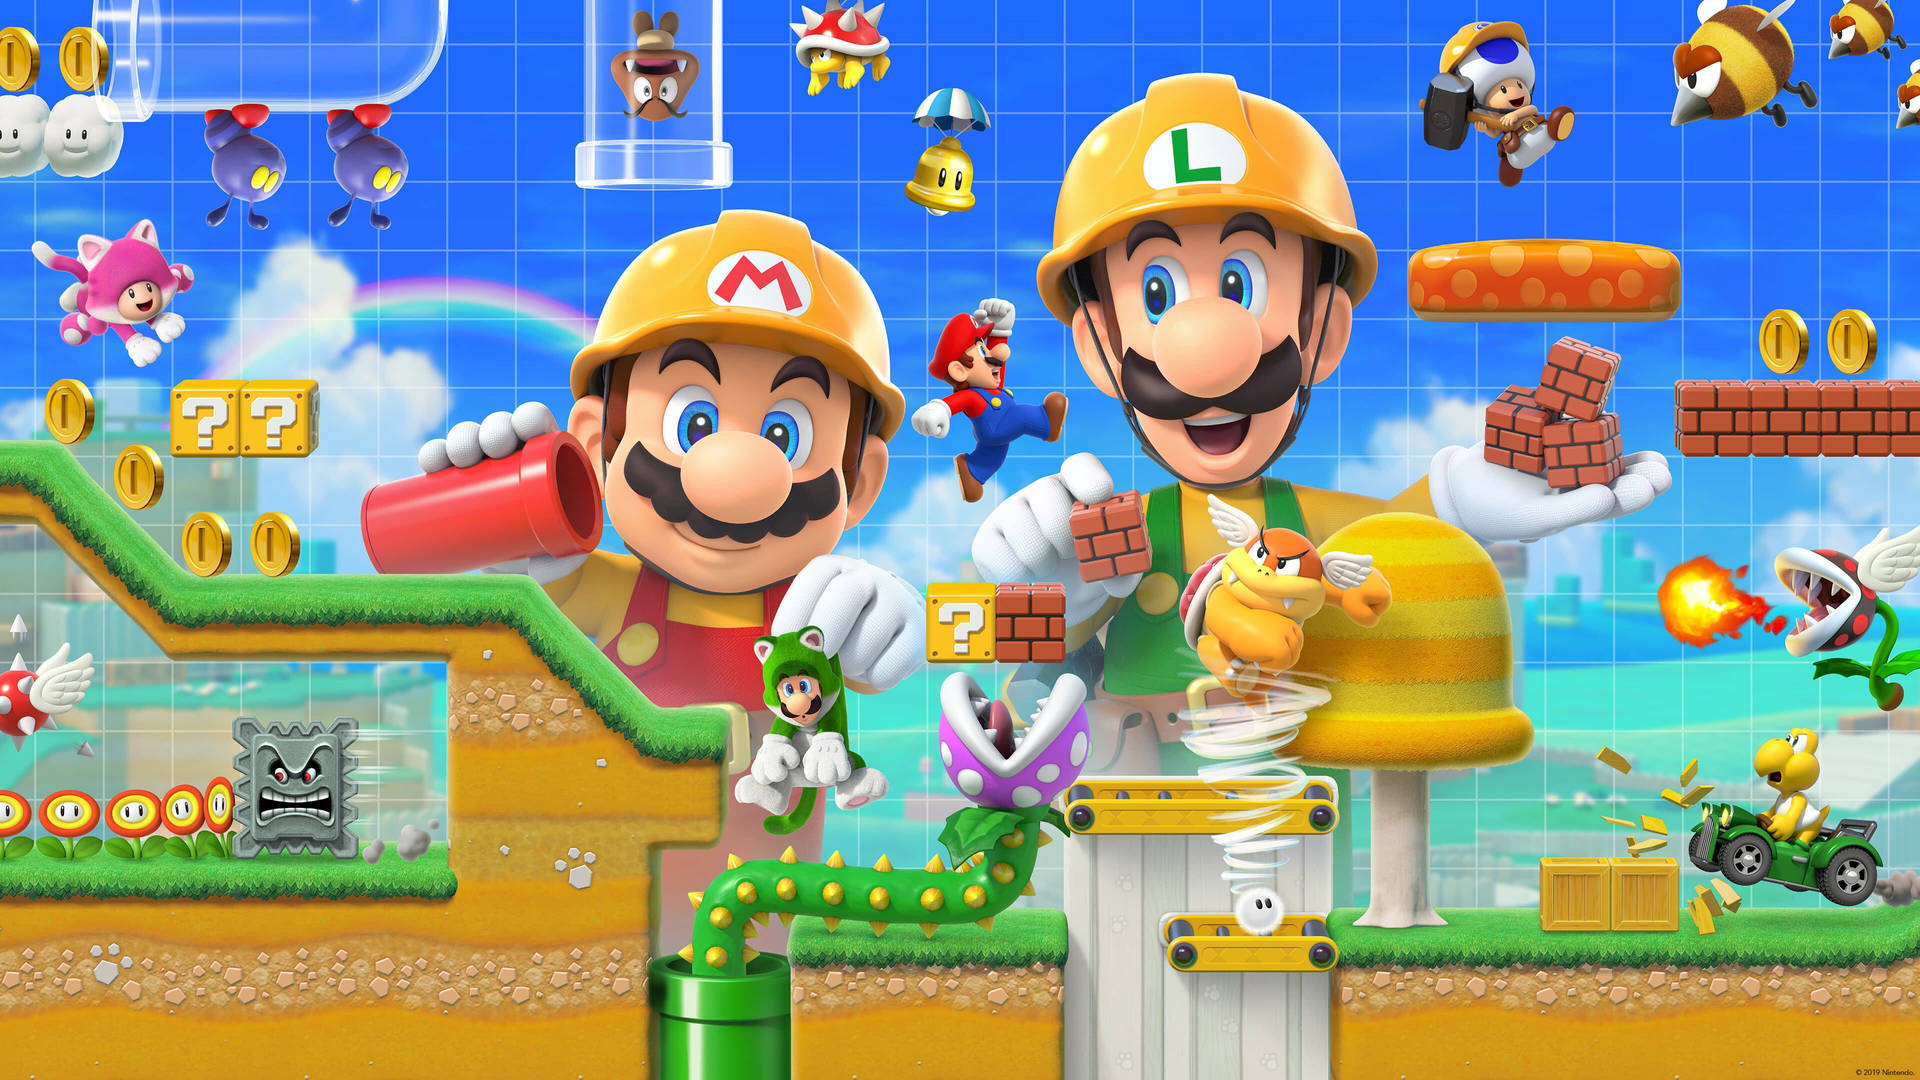 Super Mario Maker With Luigi Wallpaper